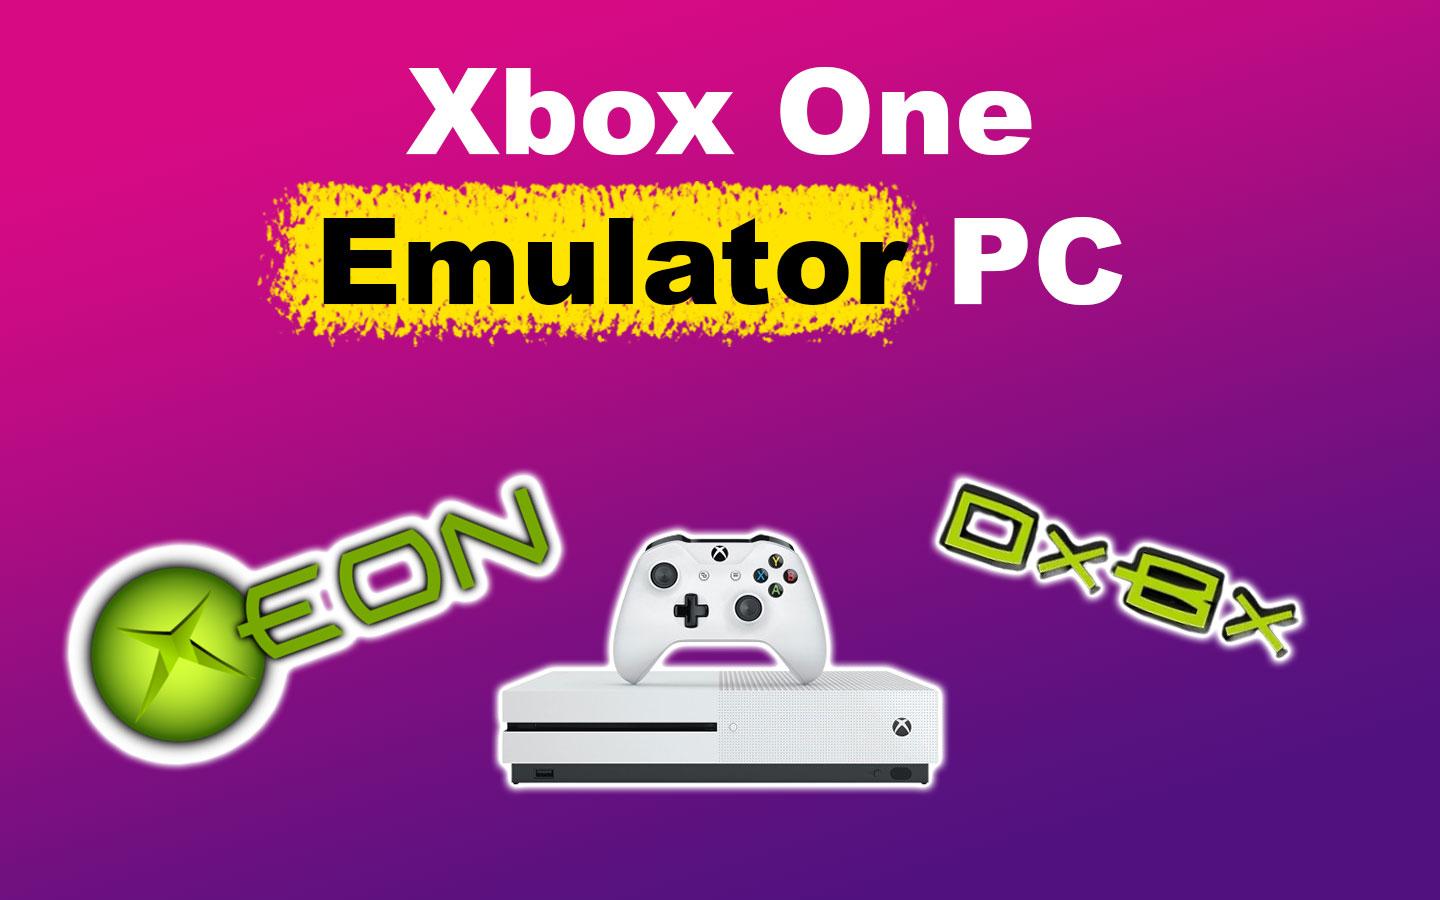 Xbox One Emulator PC